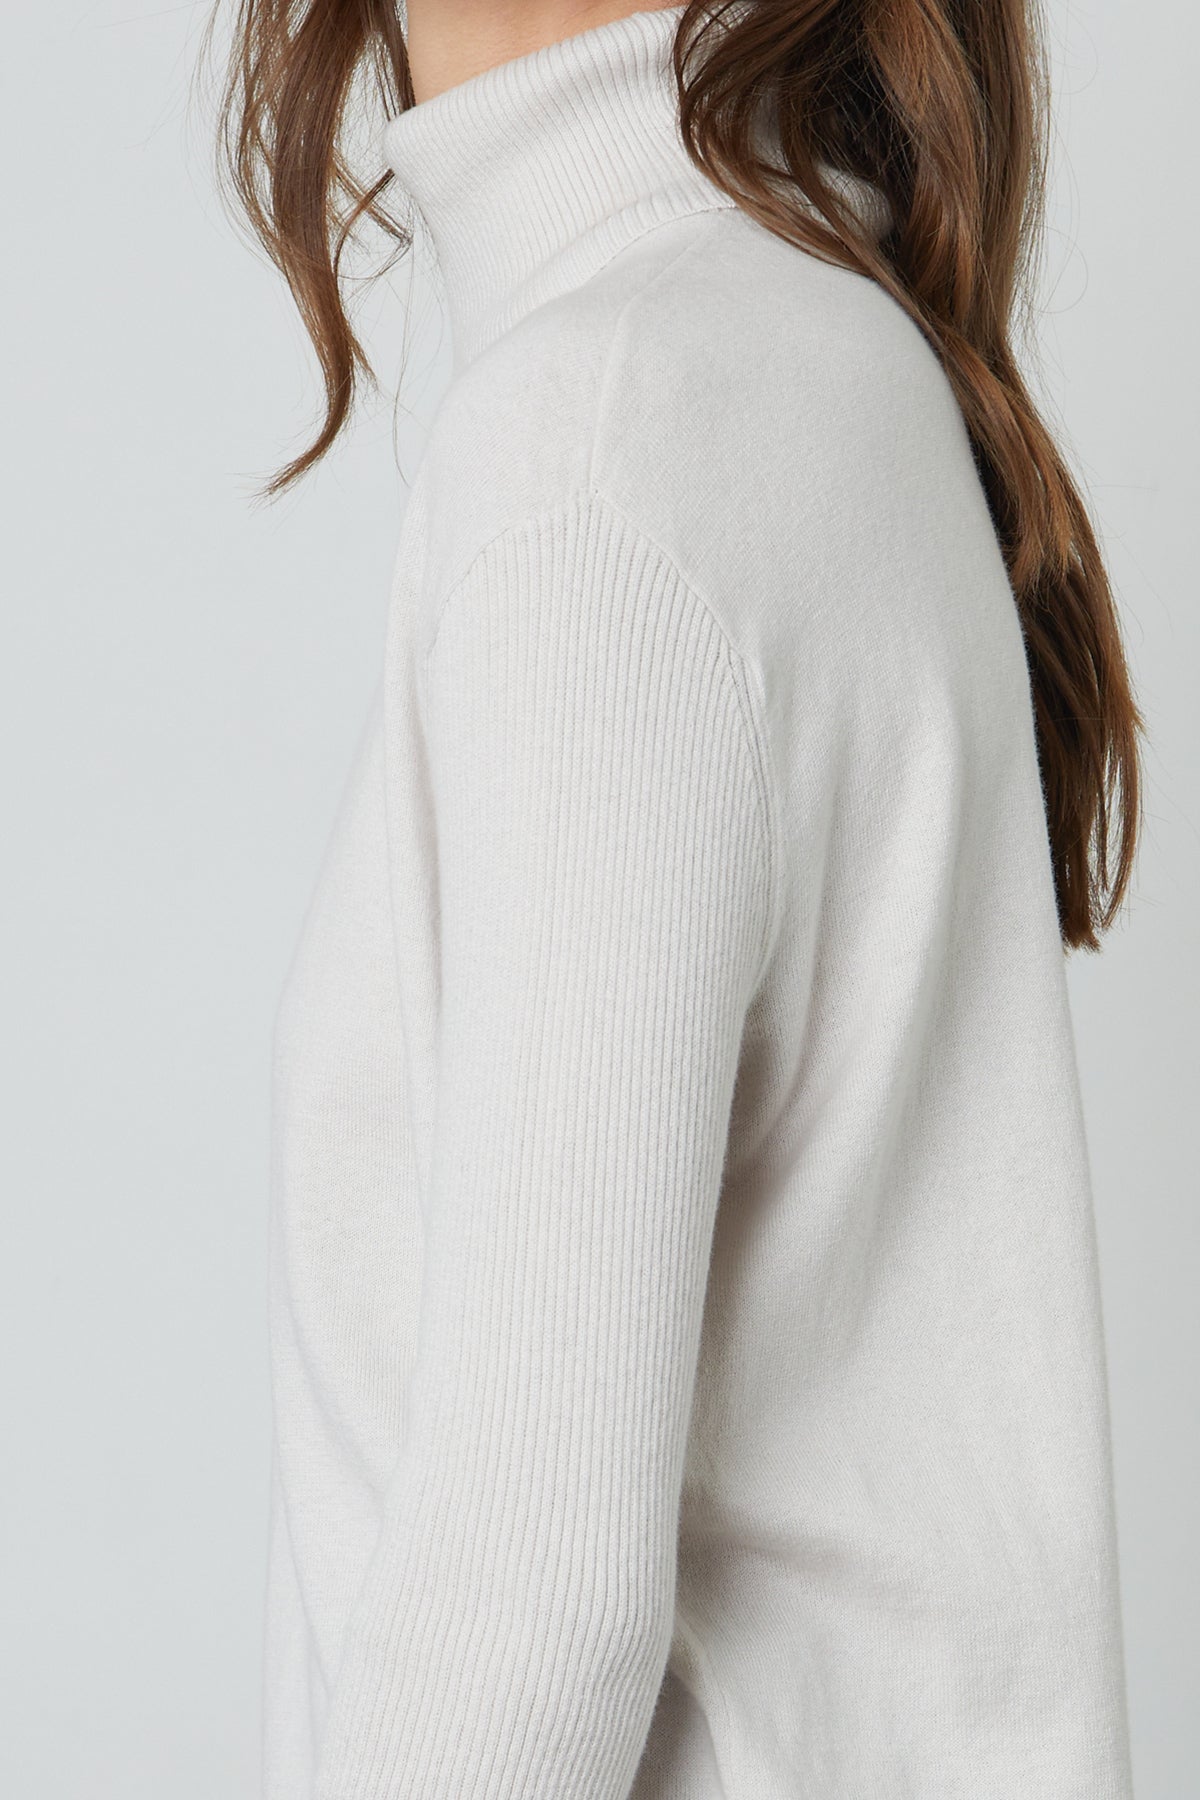 Lux Cotton Cashmere Renny Turtleneck Sweater side and shoulder detail-25052550791361